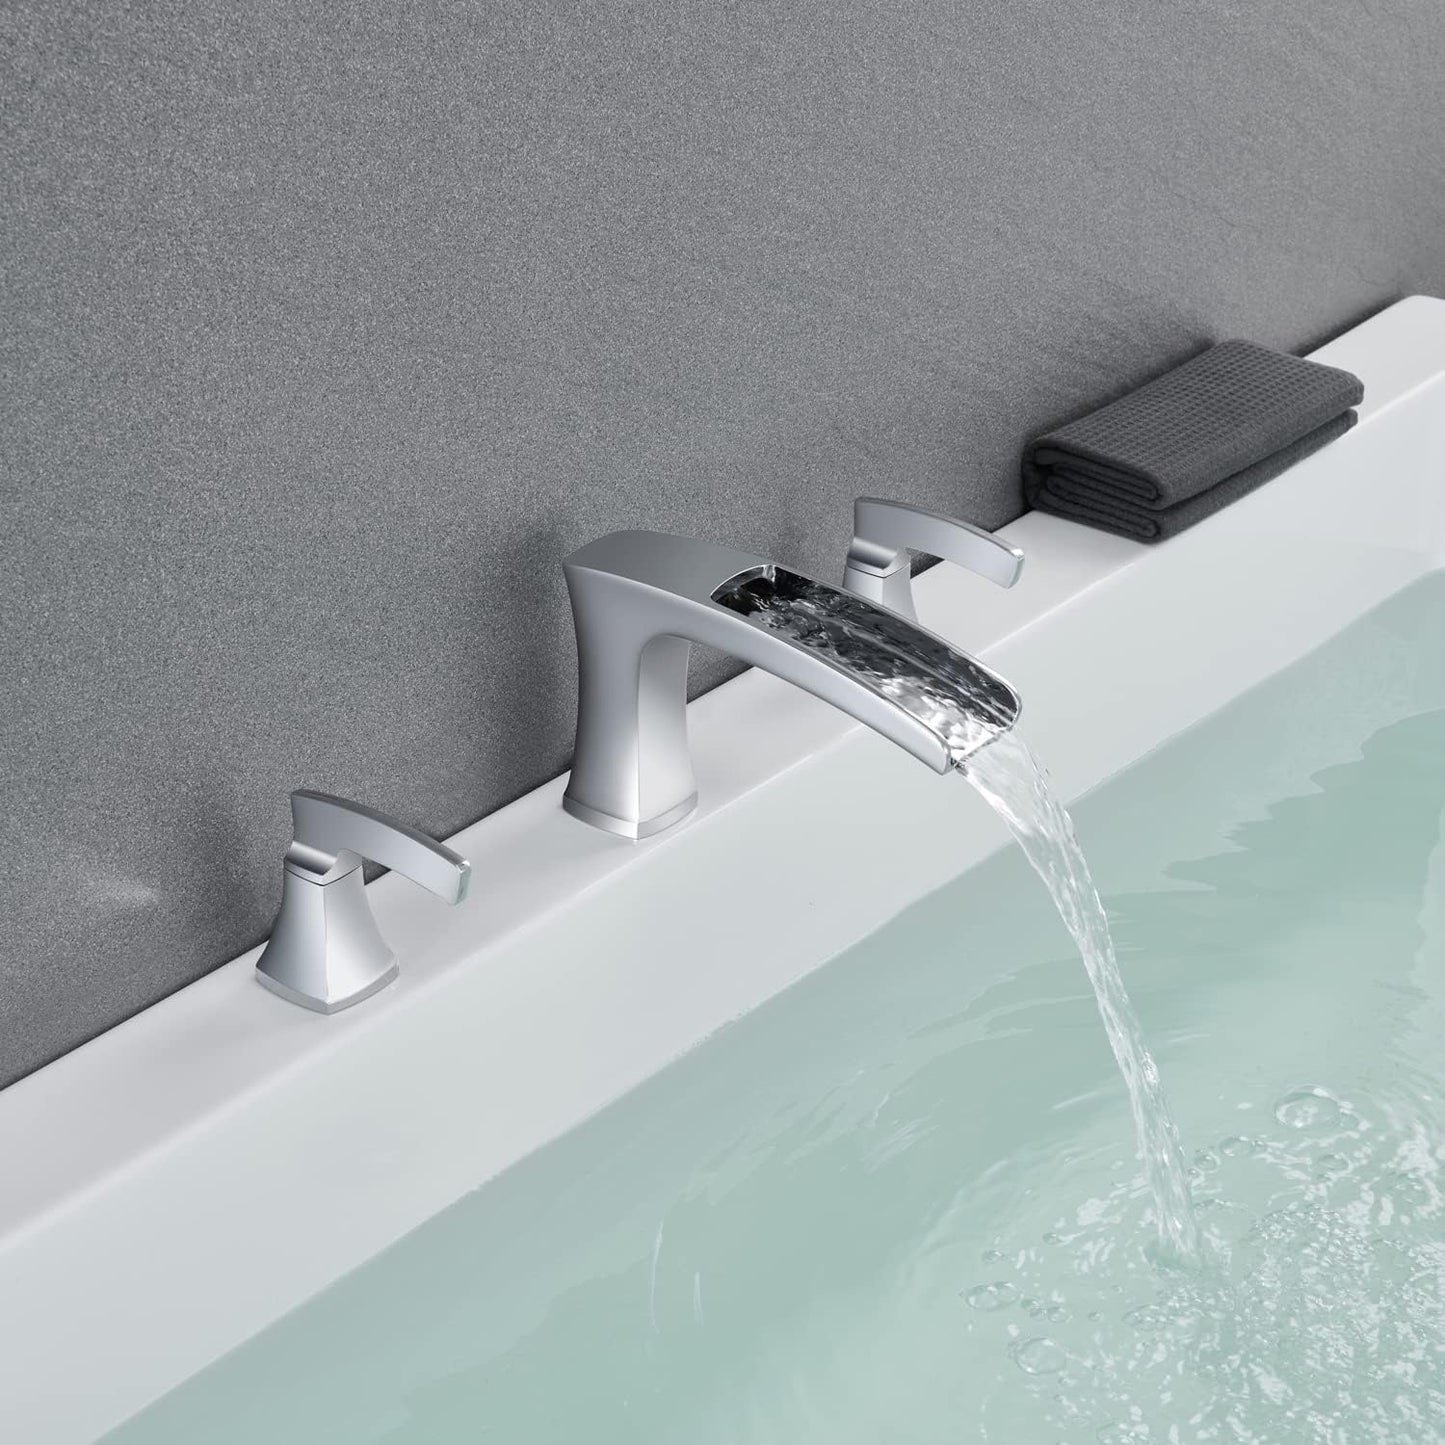 Artiqua Tub Faucet Roman Waterfall Tub Filler Chrome Deck Mount Bathtub Faucets 3 Hole Brass Bathroom Faucets with 2 Handles (Chrome)